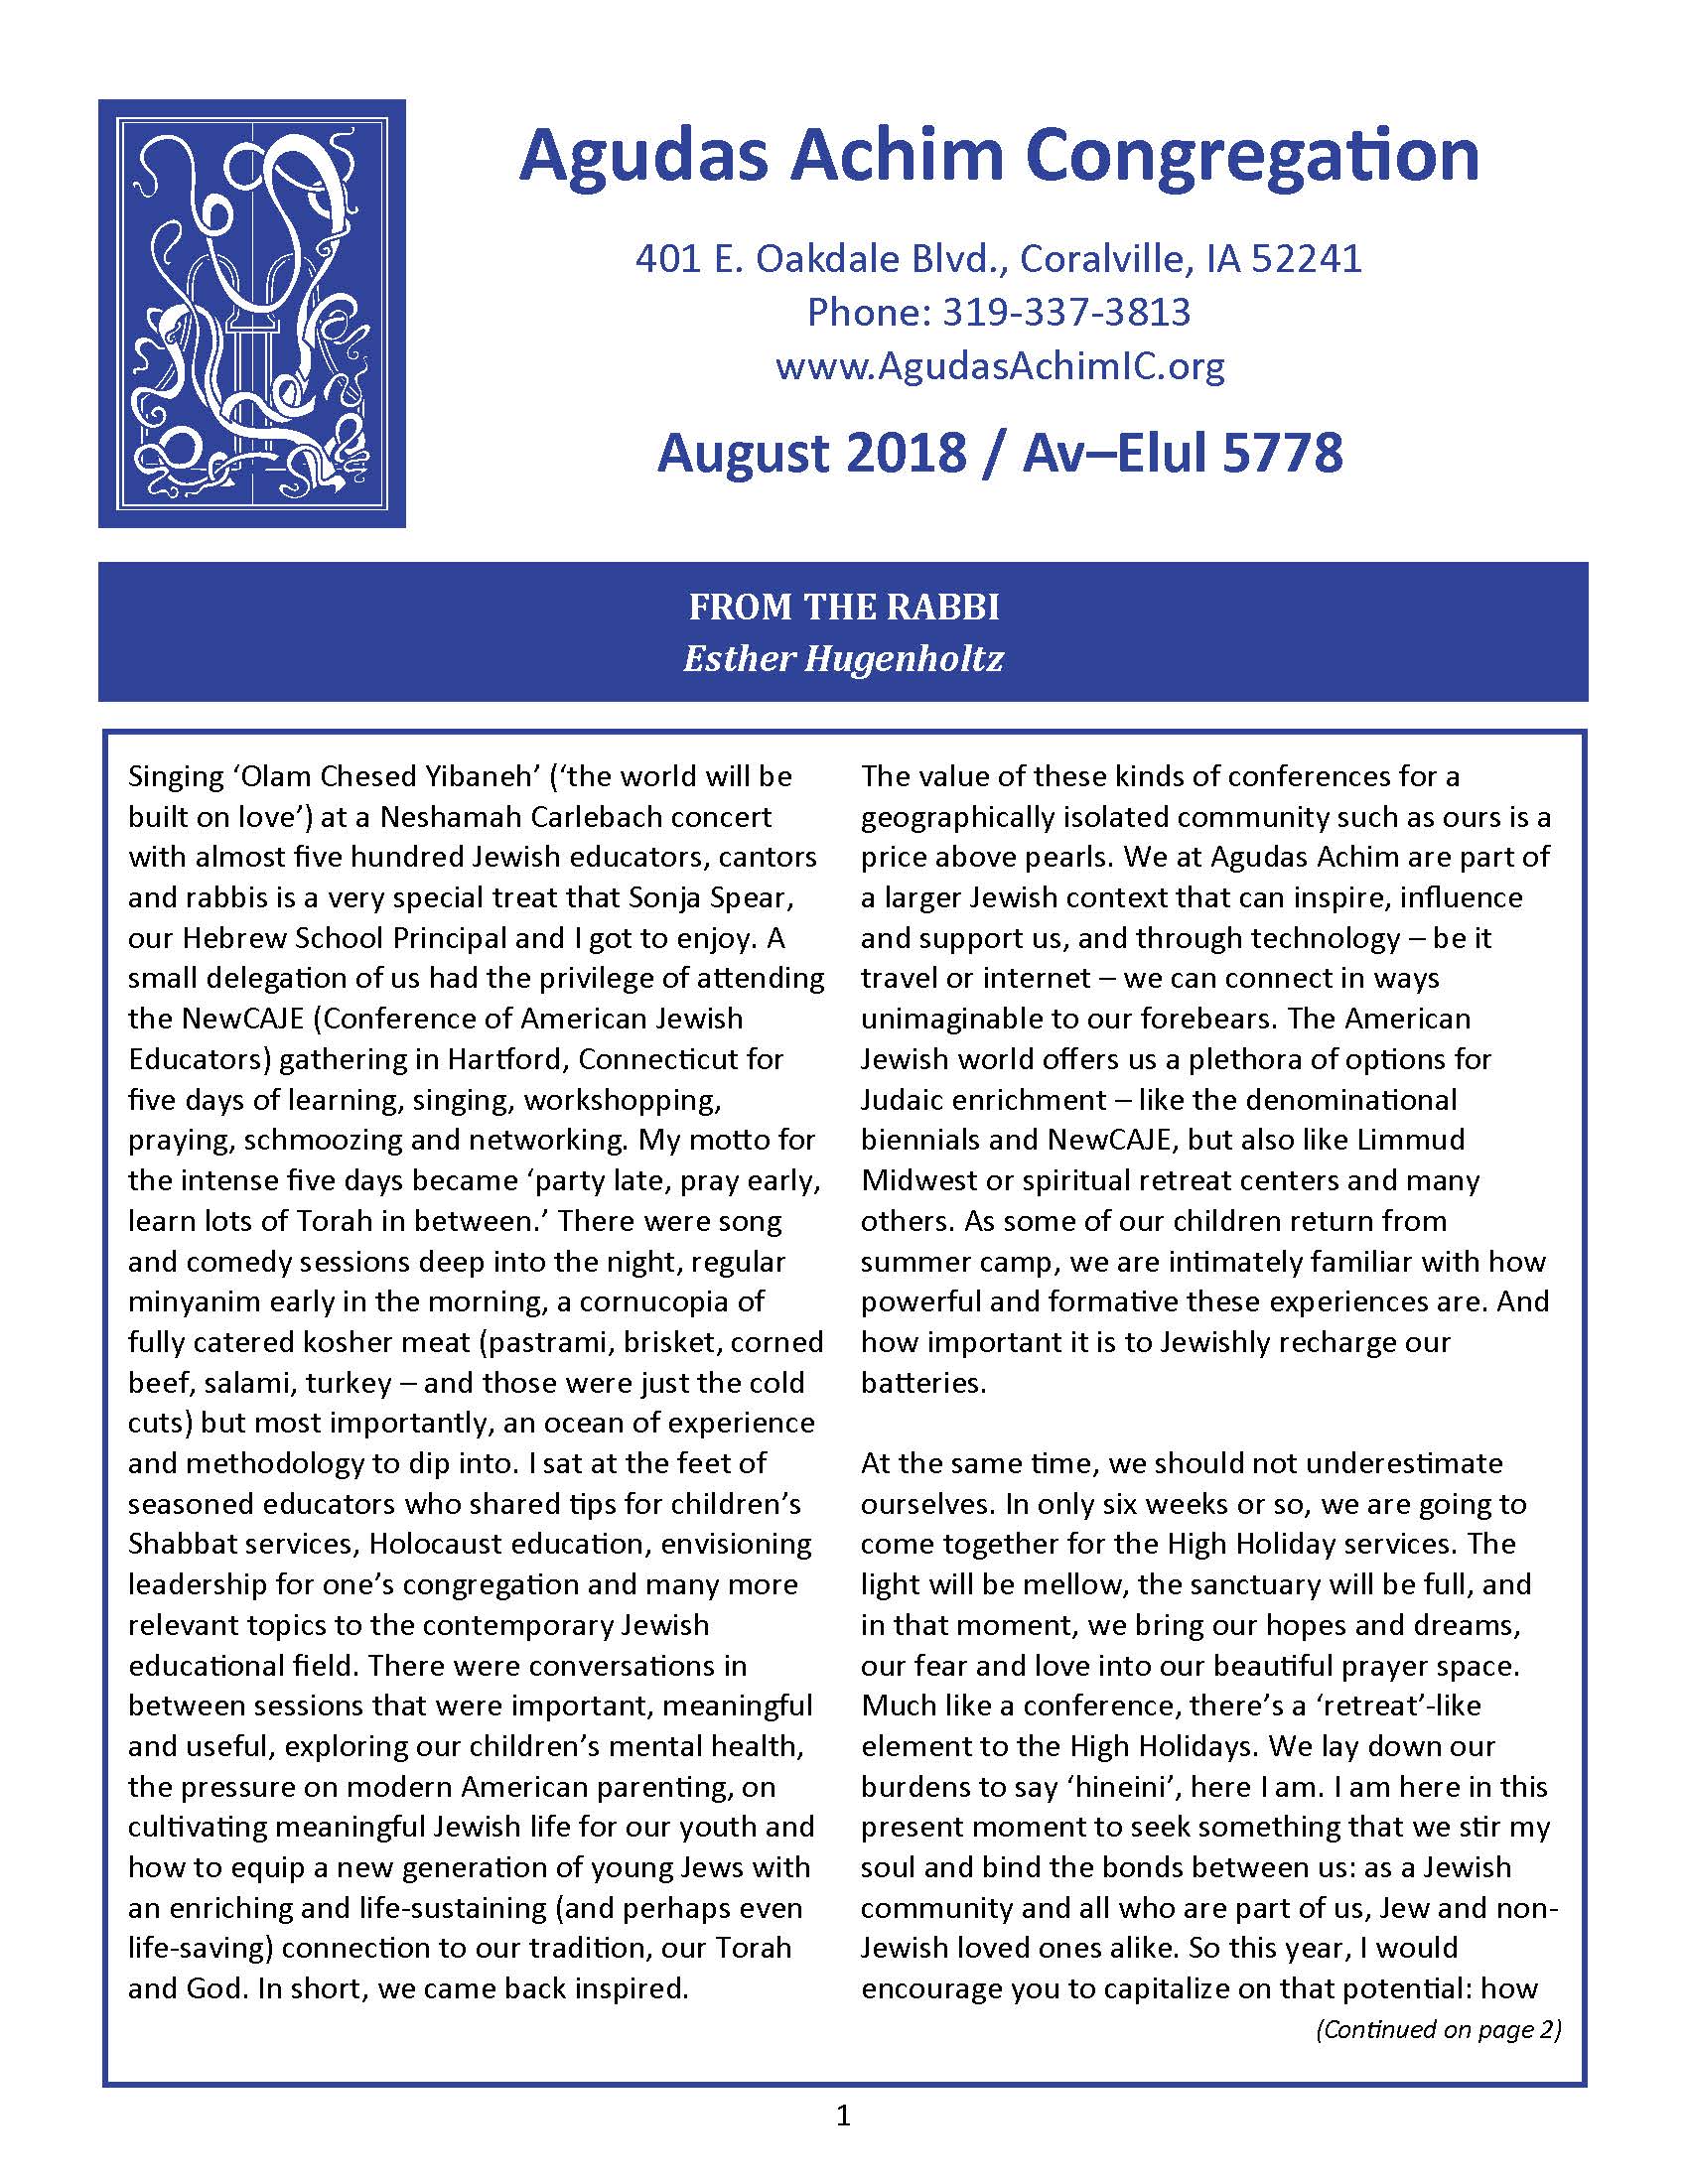 August 2018 Bulletin